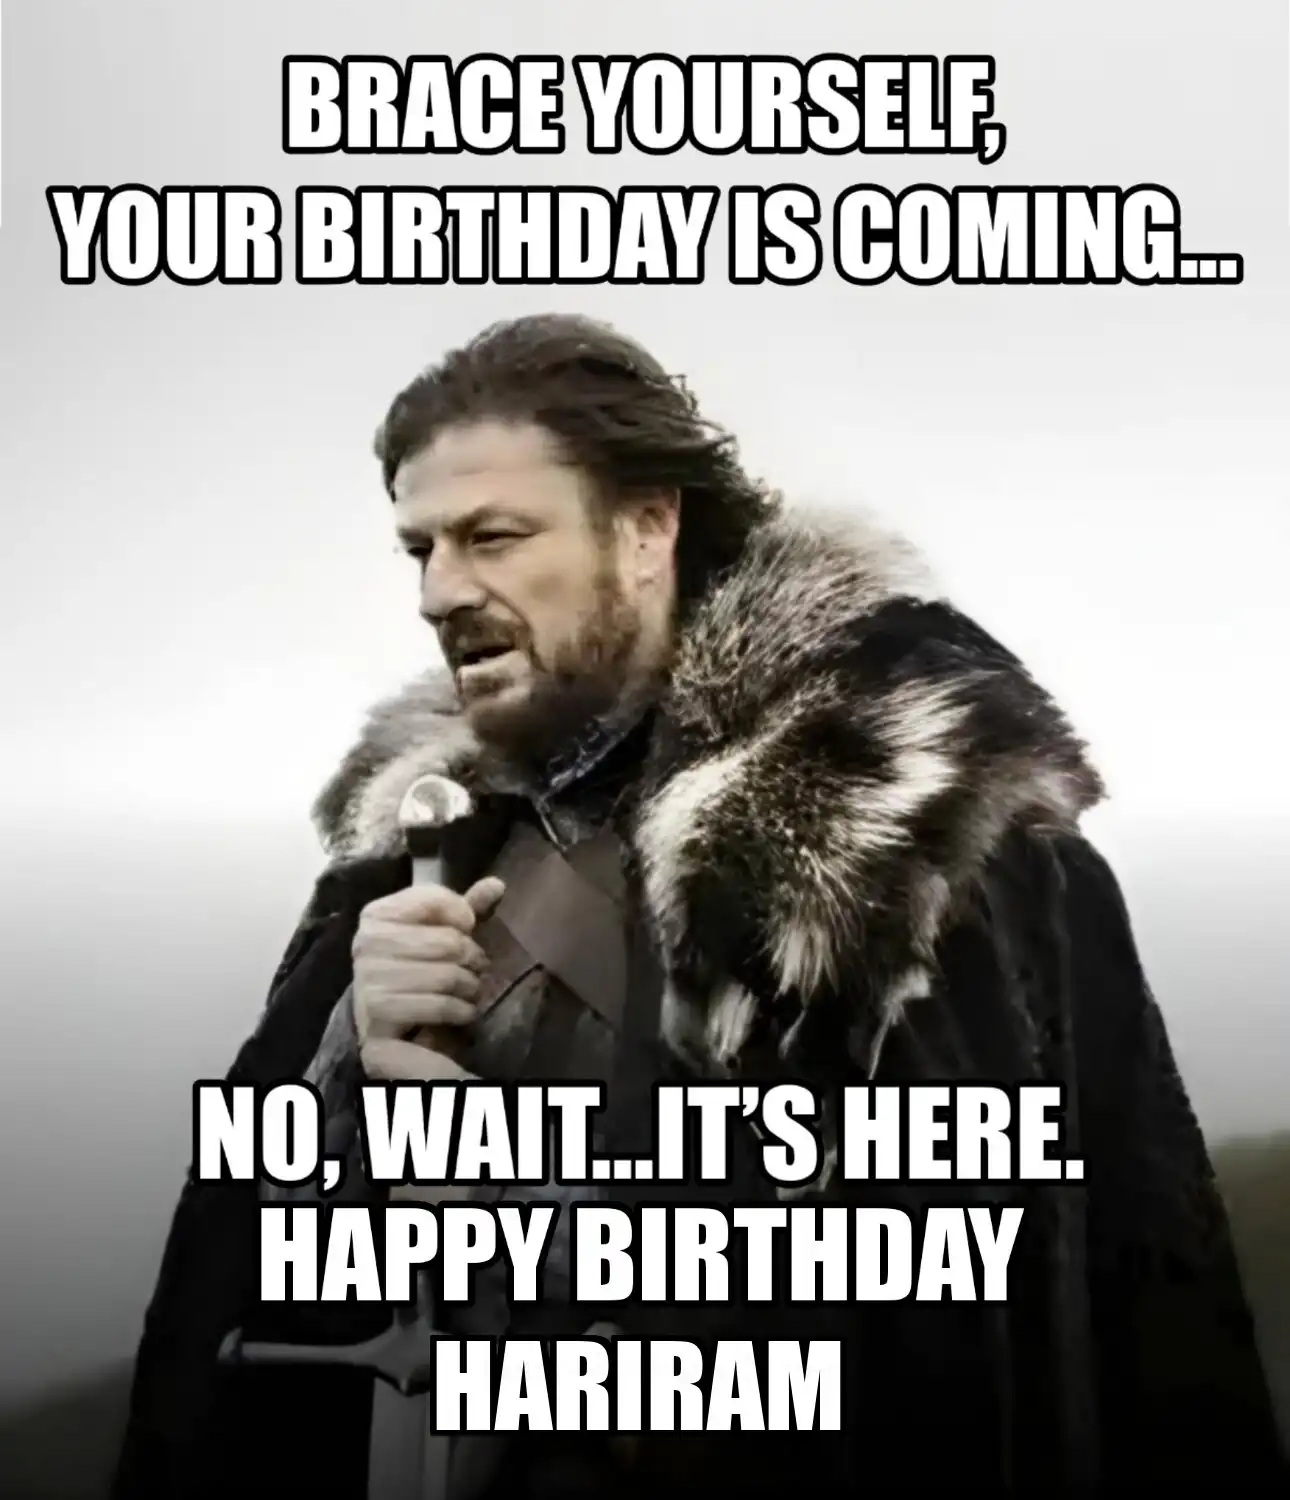 Happy Birthday Hariram Brace Yourself Your Birthday Is Coming Meme